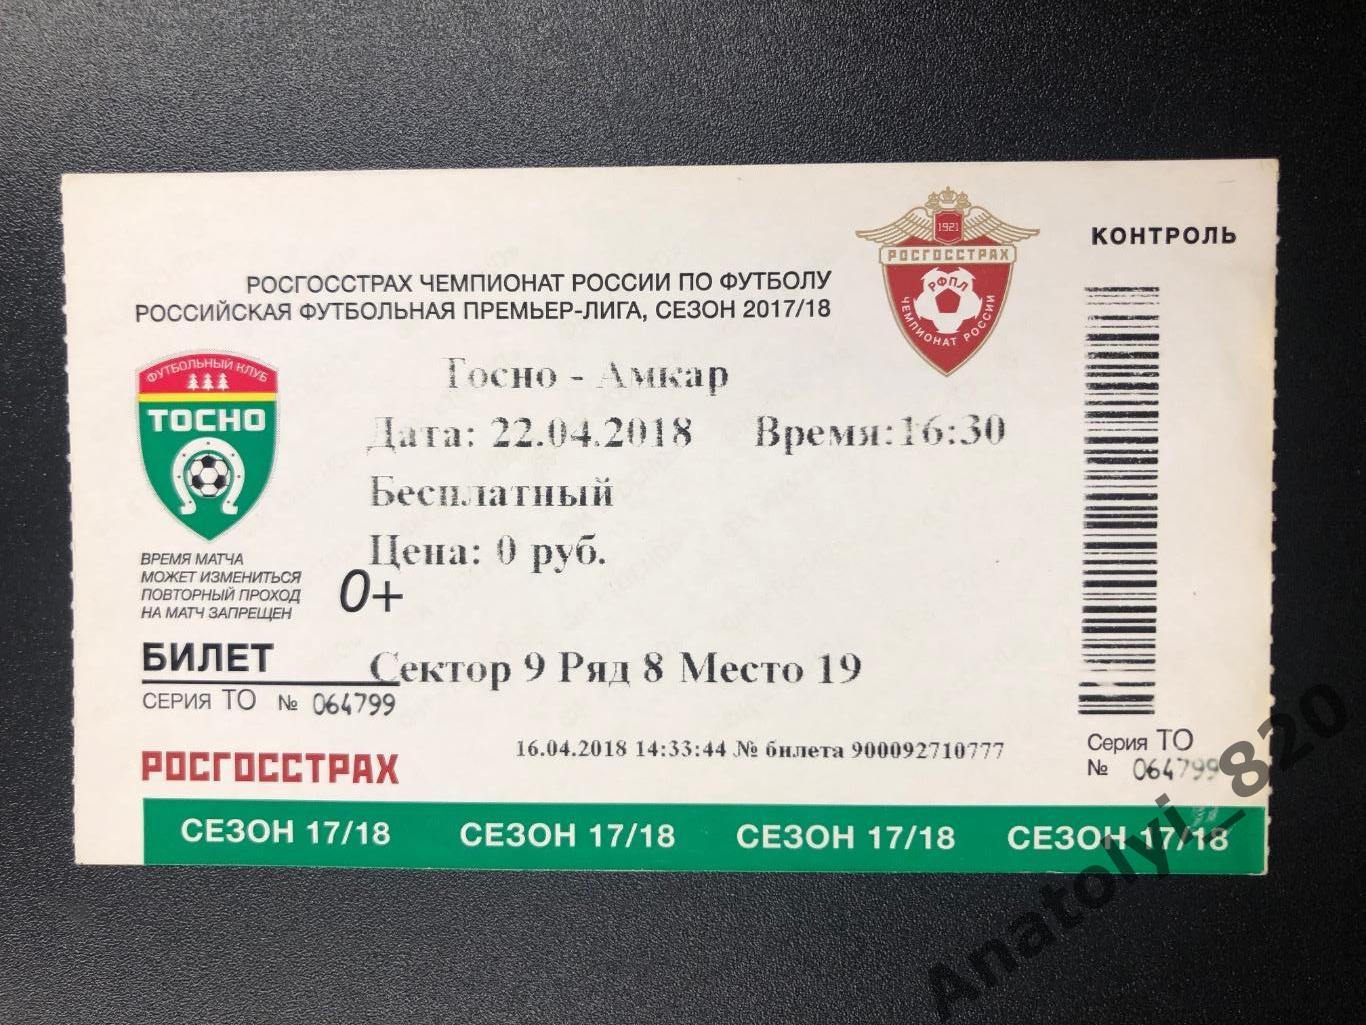 ФК Тосно - Амкар Пермь, 22.04.2018, билет